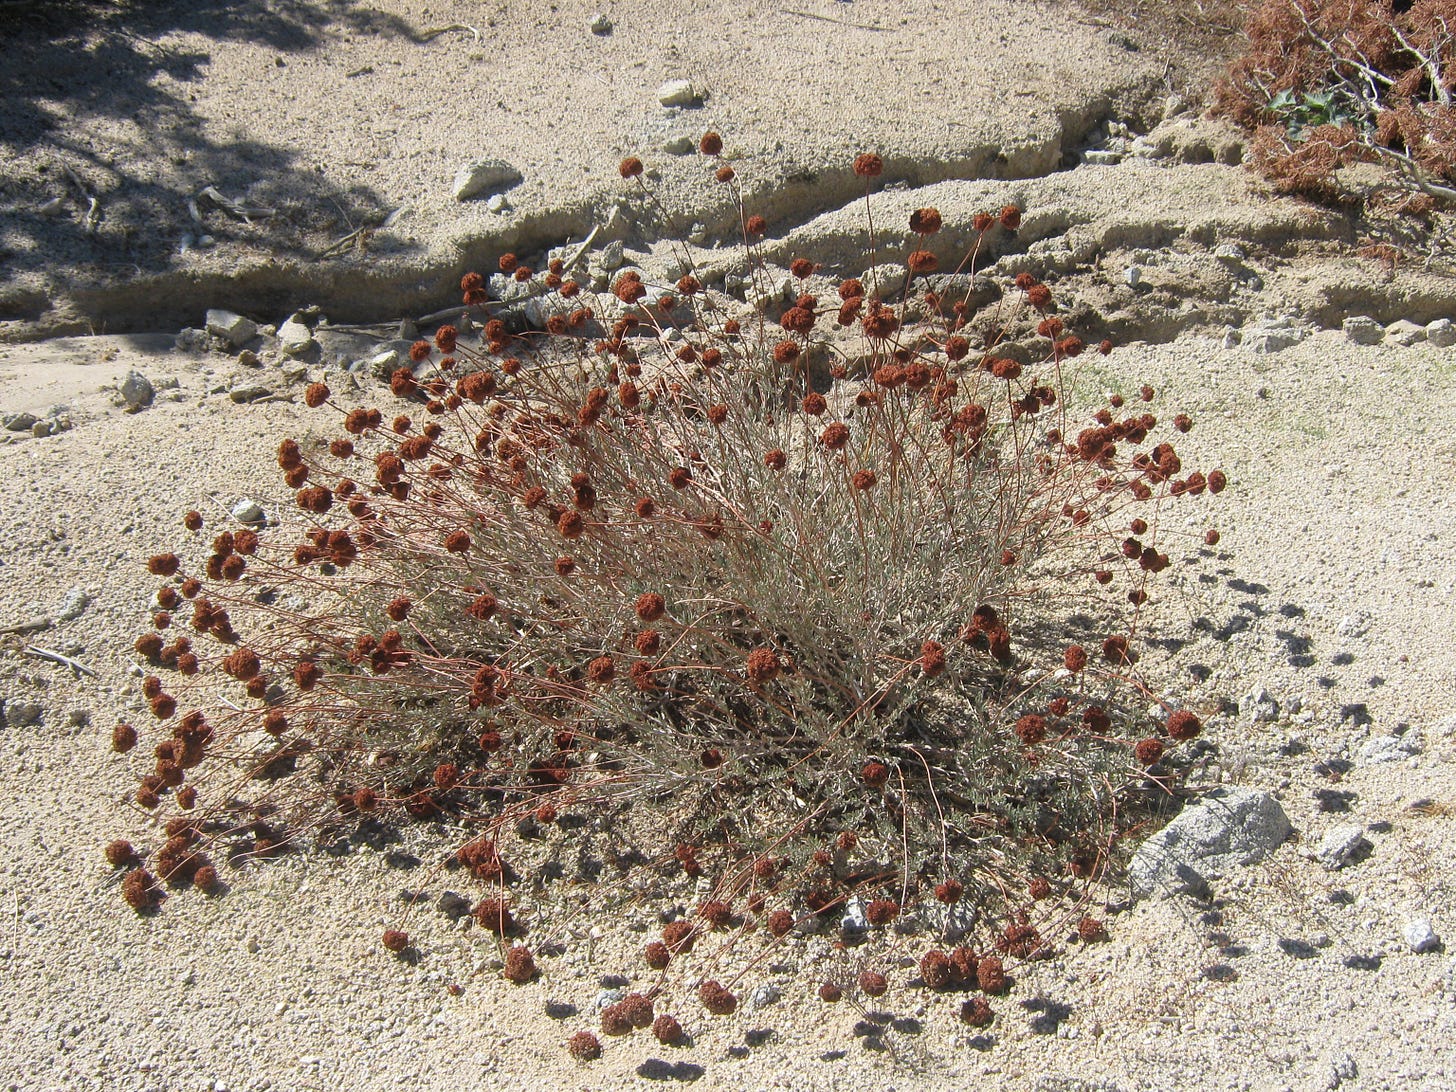 Sherry Killam photo of one bushy hairdo with many brown seed pods.